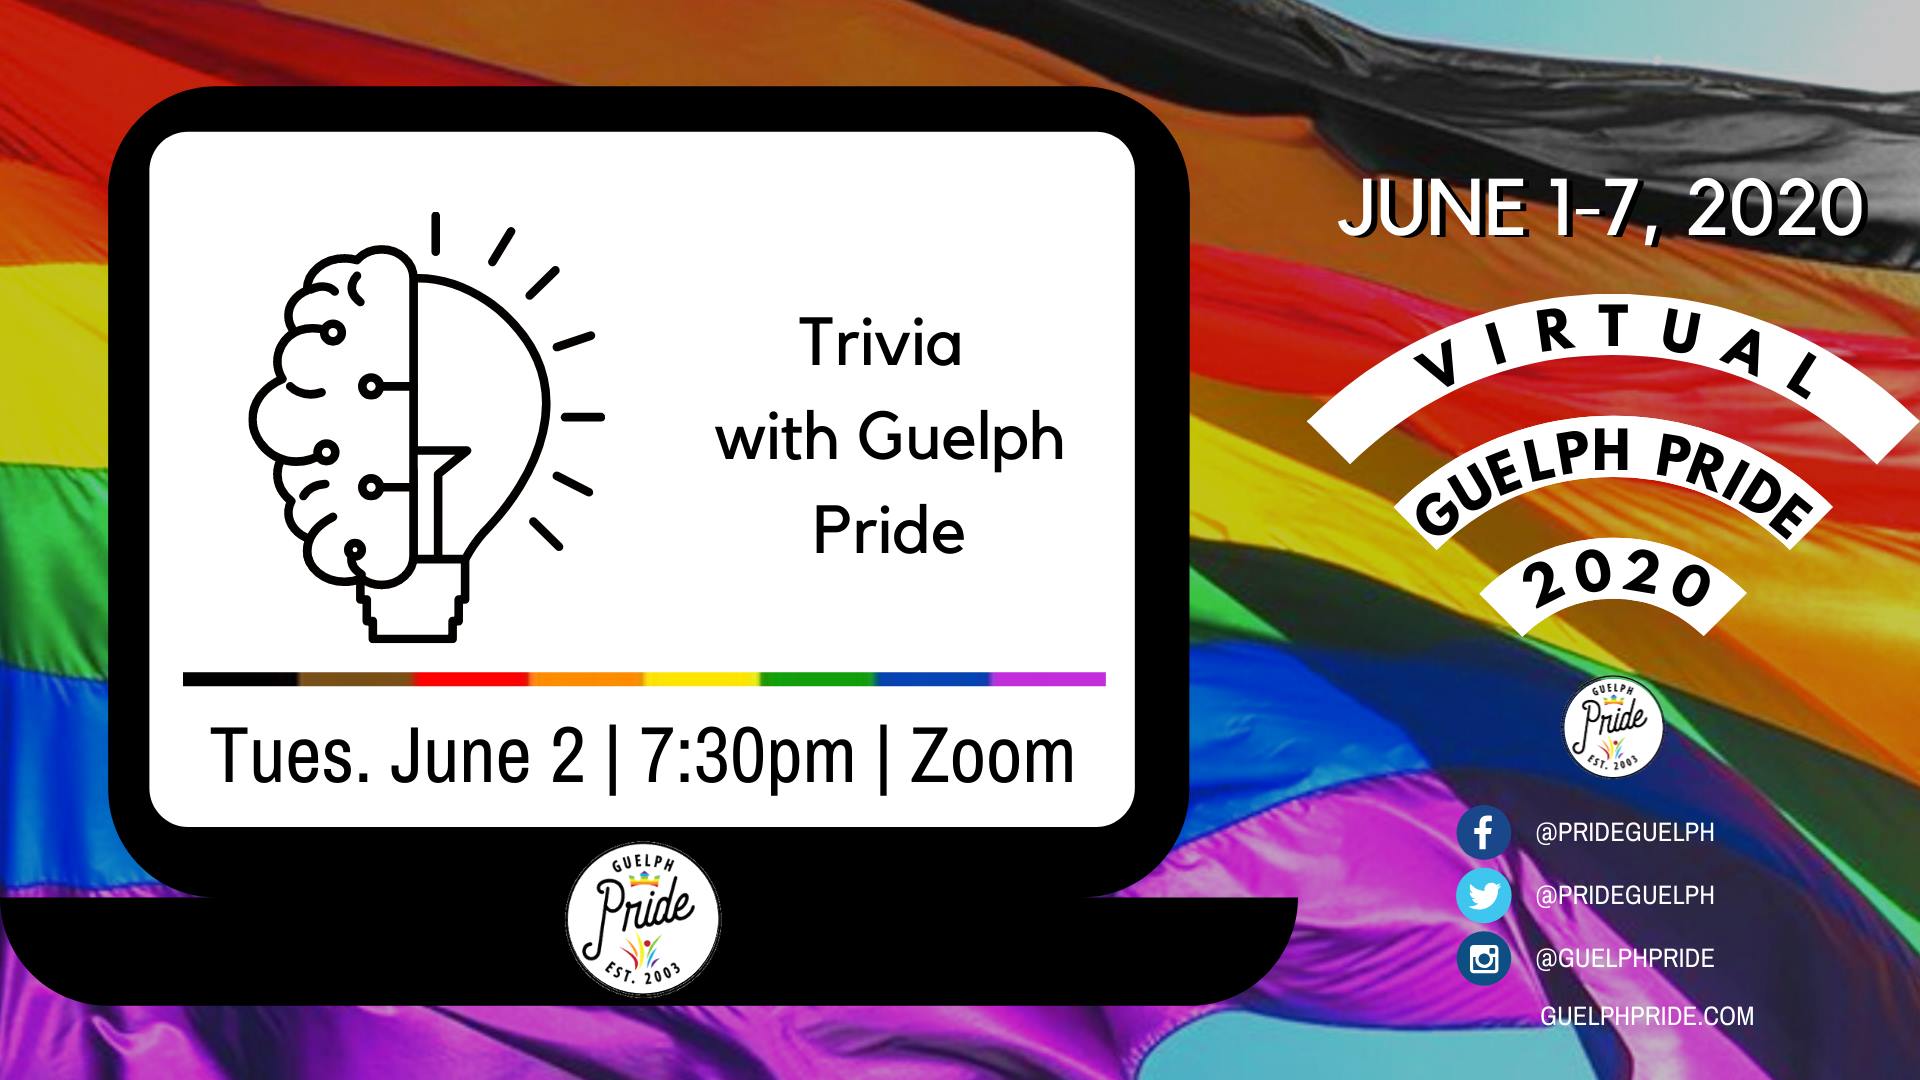 QueerEvents.ca - guelph virtual pride 2020 - pride trivia event listing 